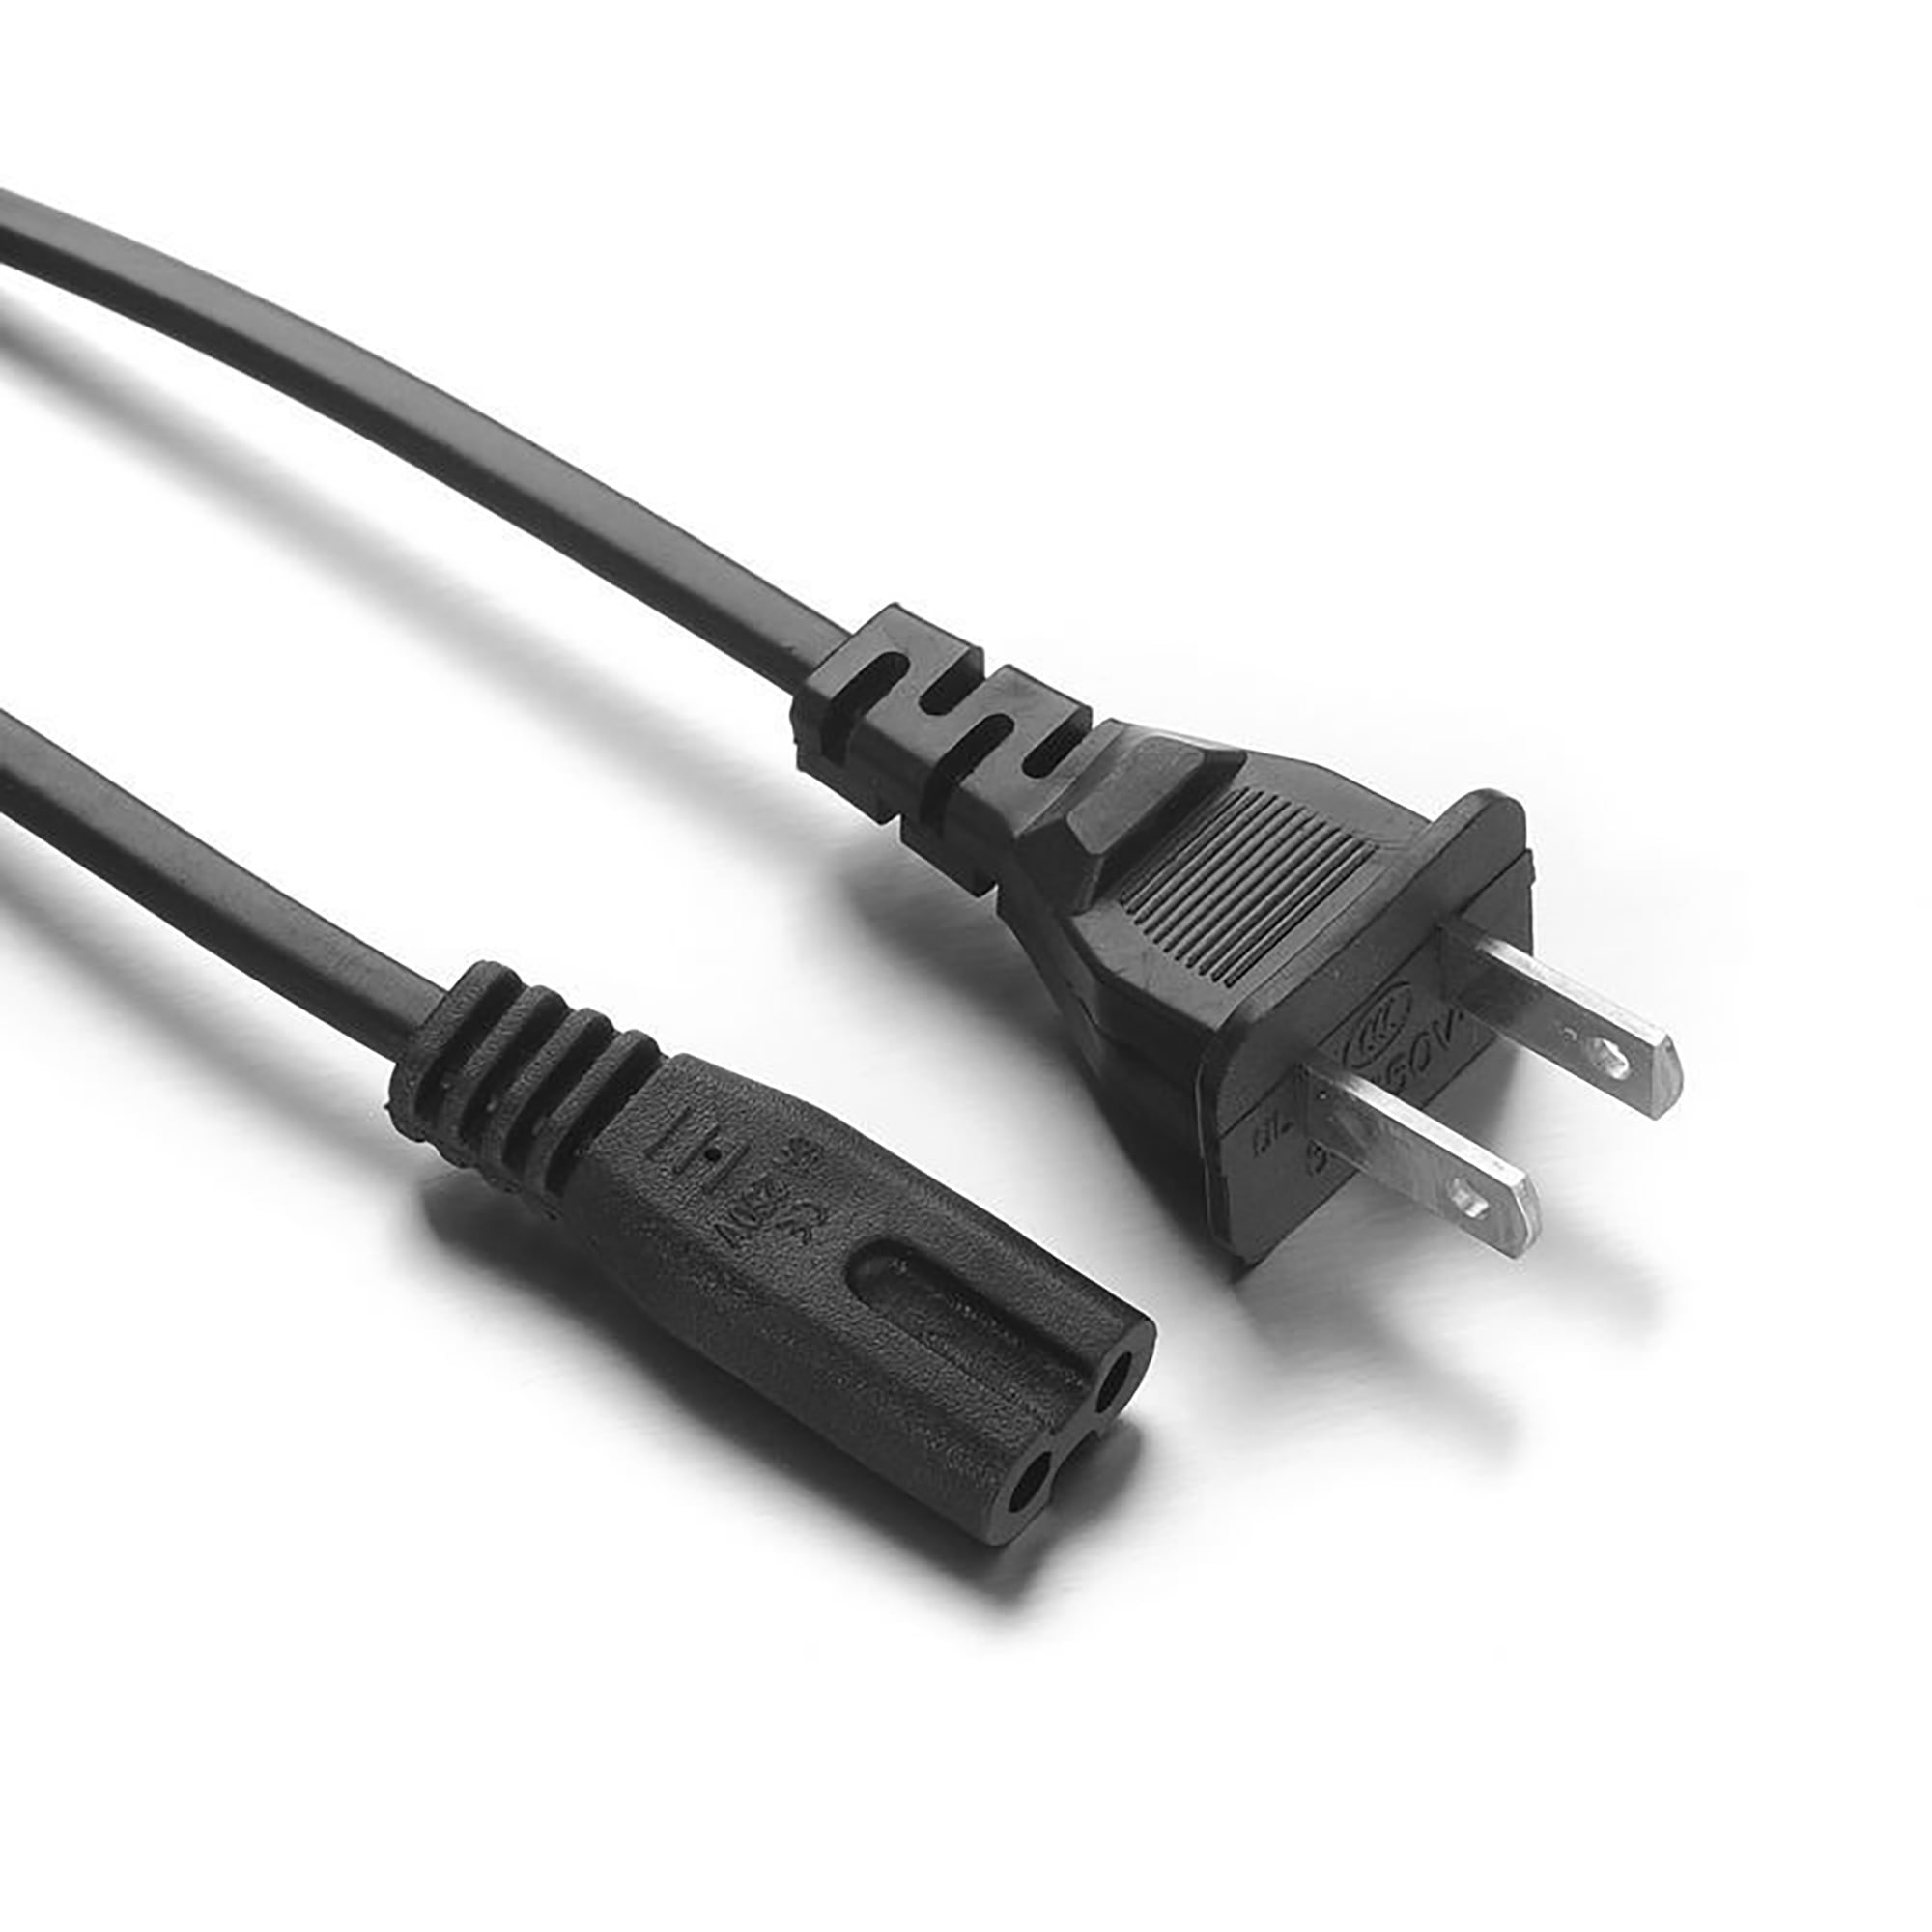 Câble USB + cordon d'alimentation pour imprimante Epson, pour WorkForce 633  XP400 XP300 XP600 645 635 - AliExpress